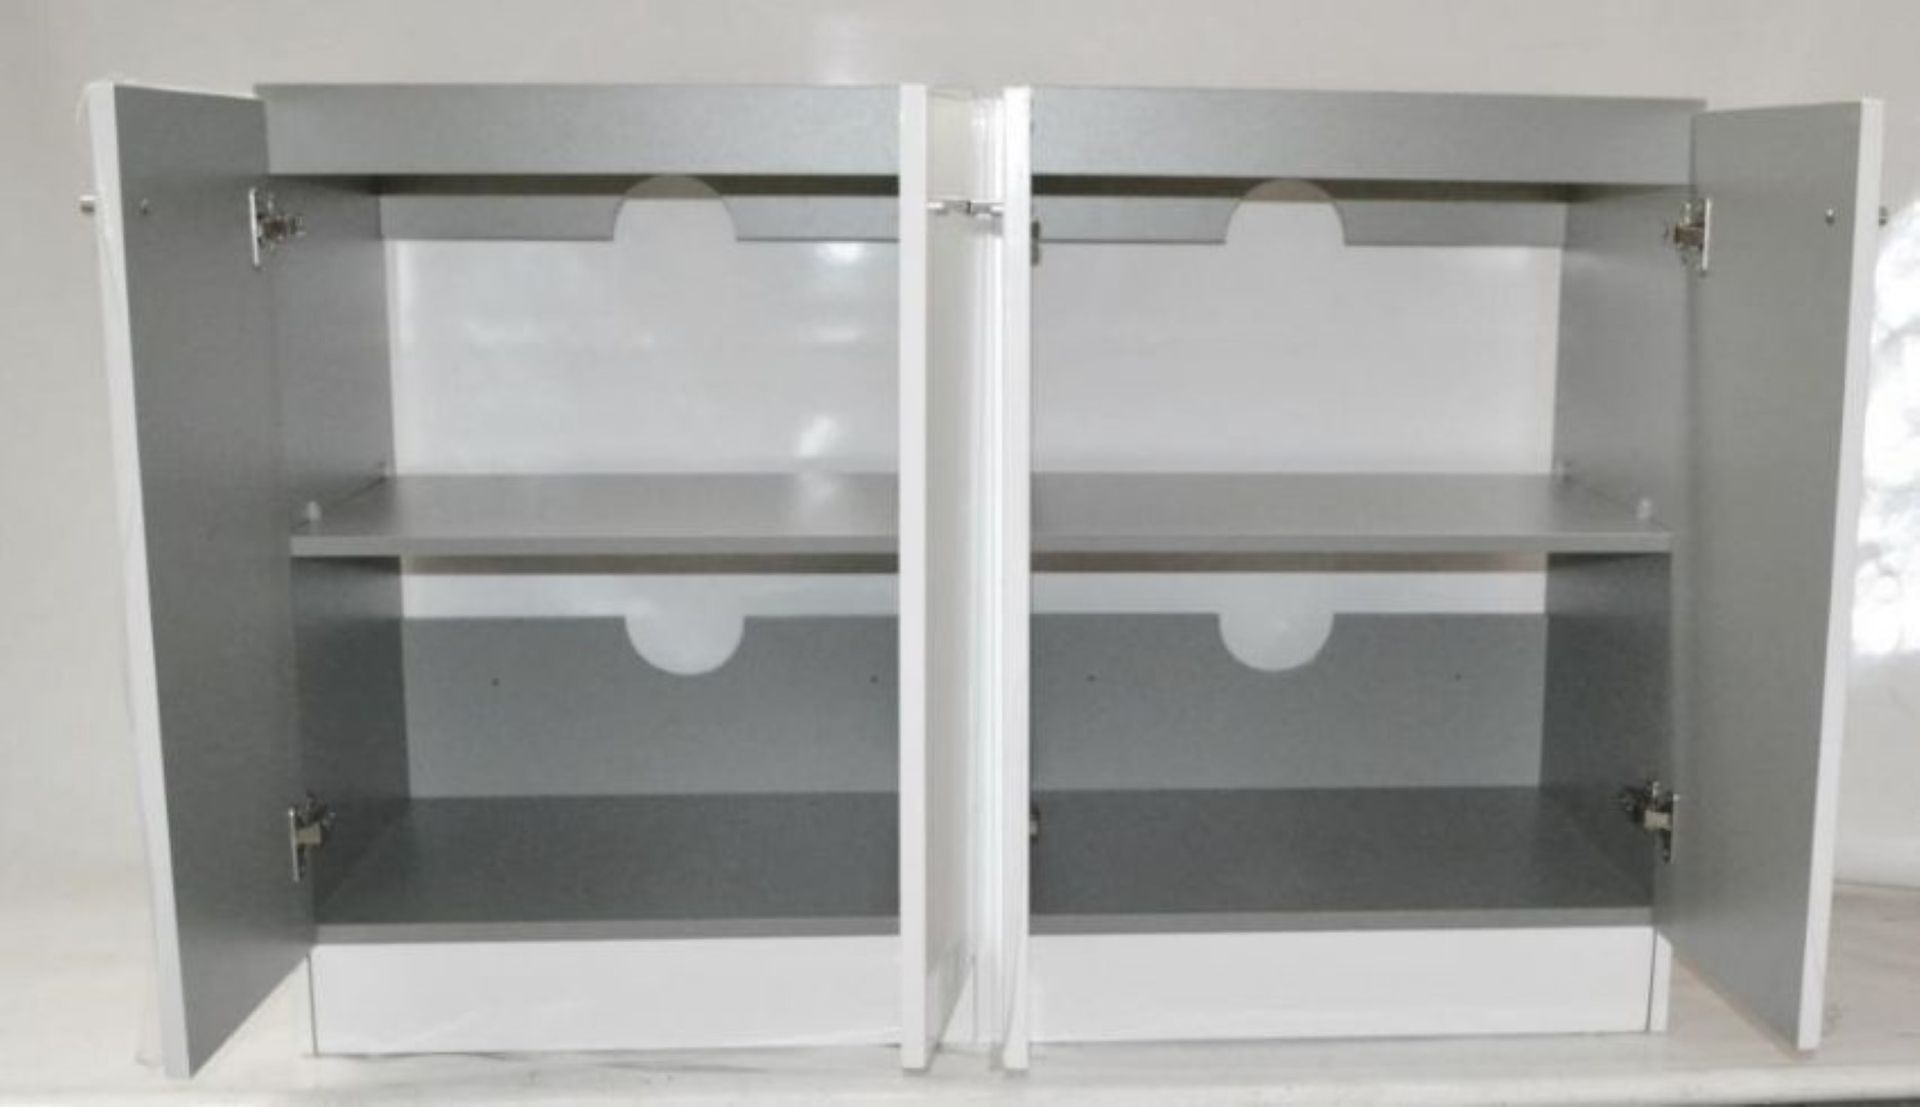 5 x Gloss White 1200mm 4-Door Double Basin Freestanding Bathroom Vanity Cabinets - New & Boxed Stock - Image 6 of 8